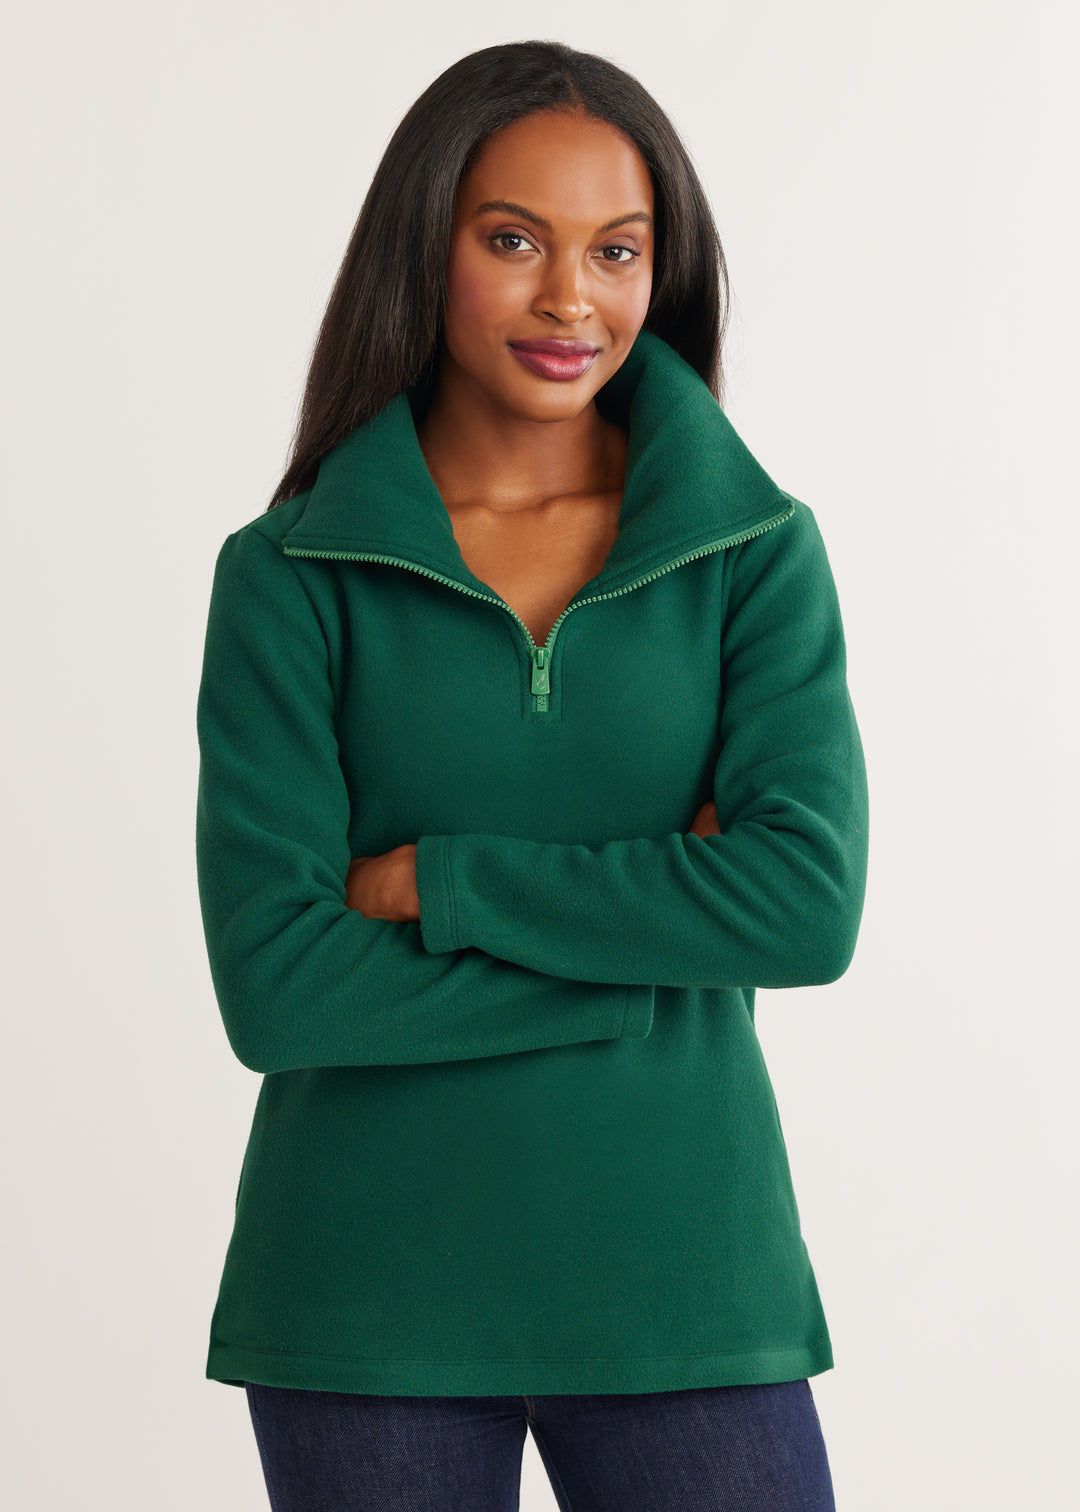 Prospect Pullover in Vello Fleece (Emerald)